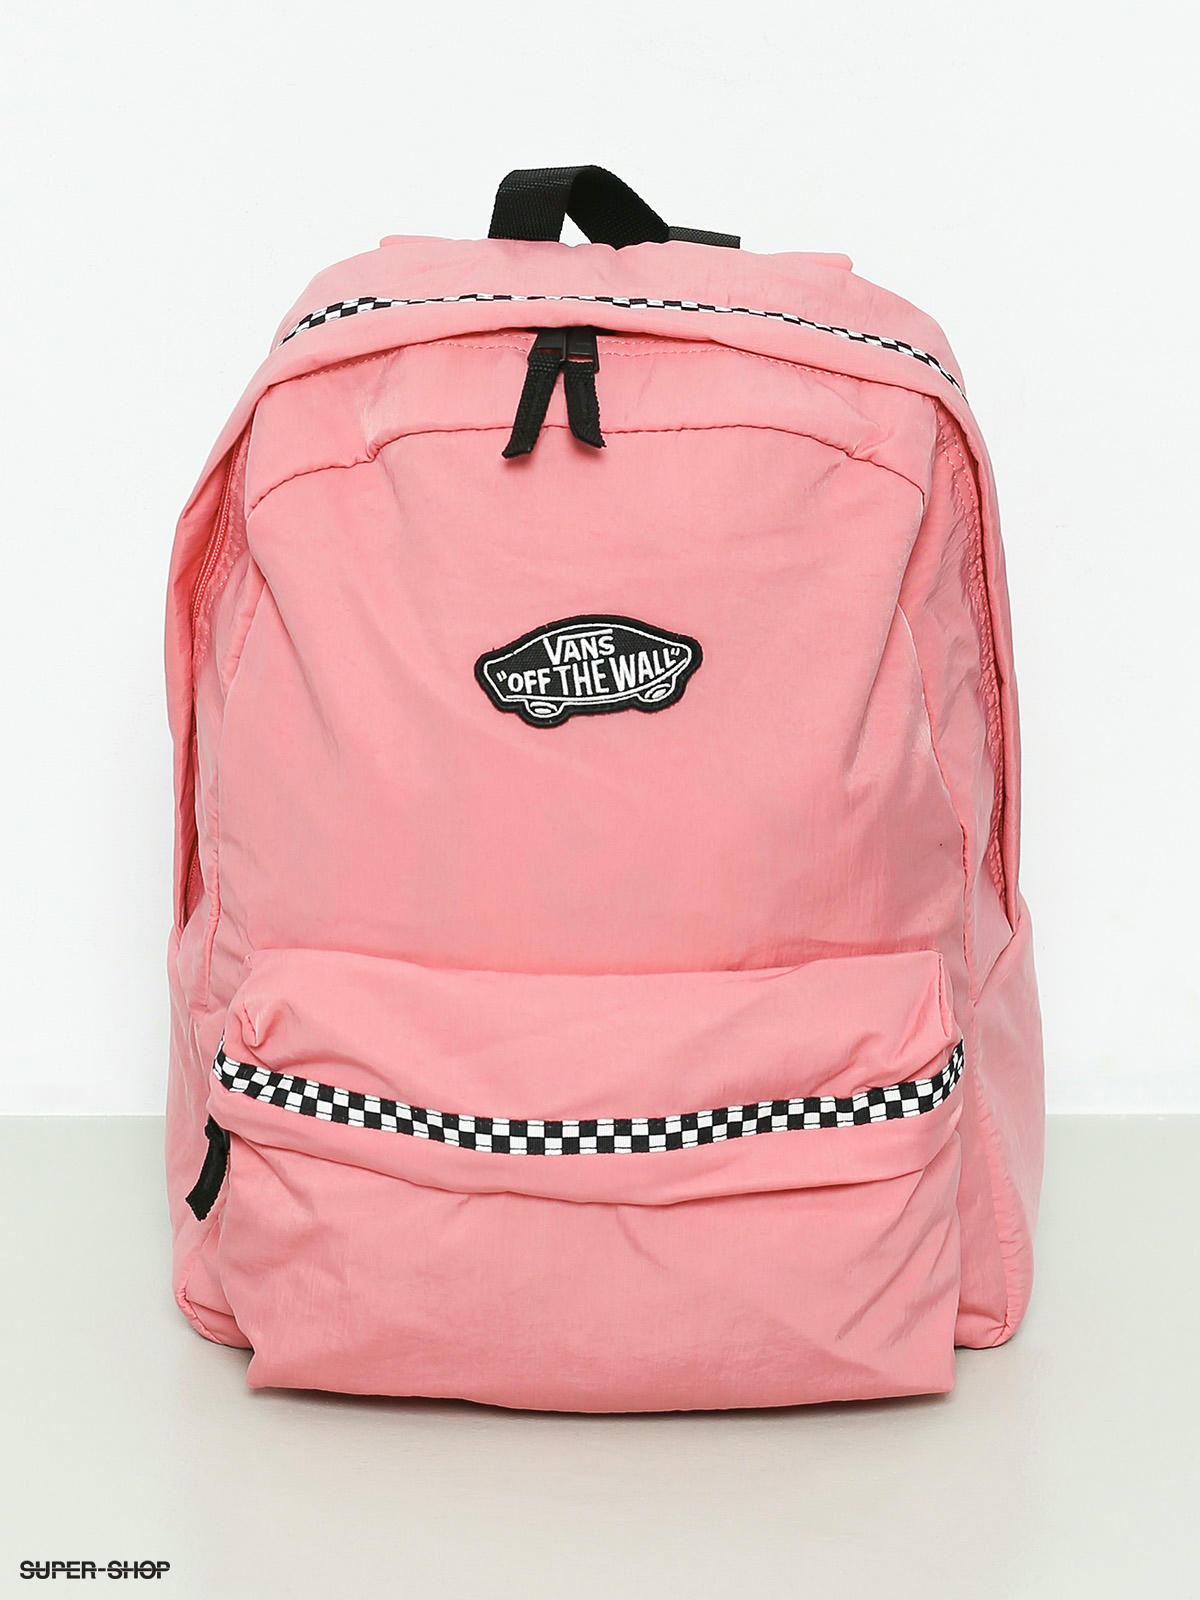 vans strawberry backpack